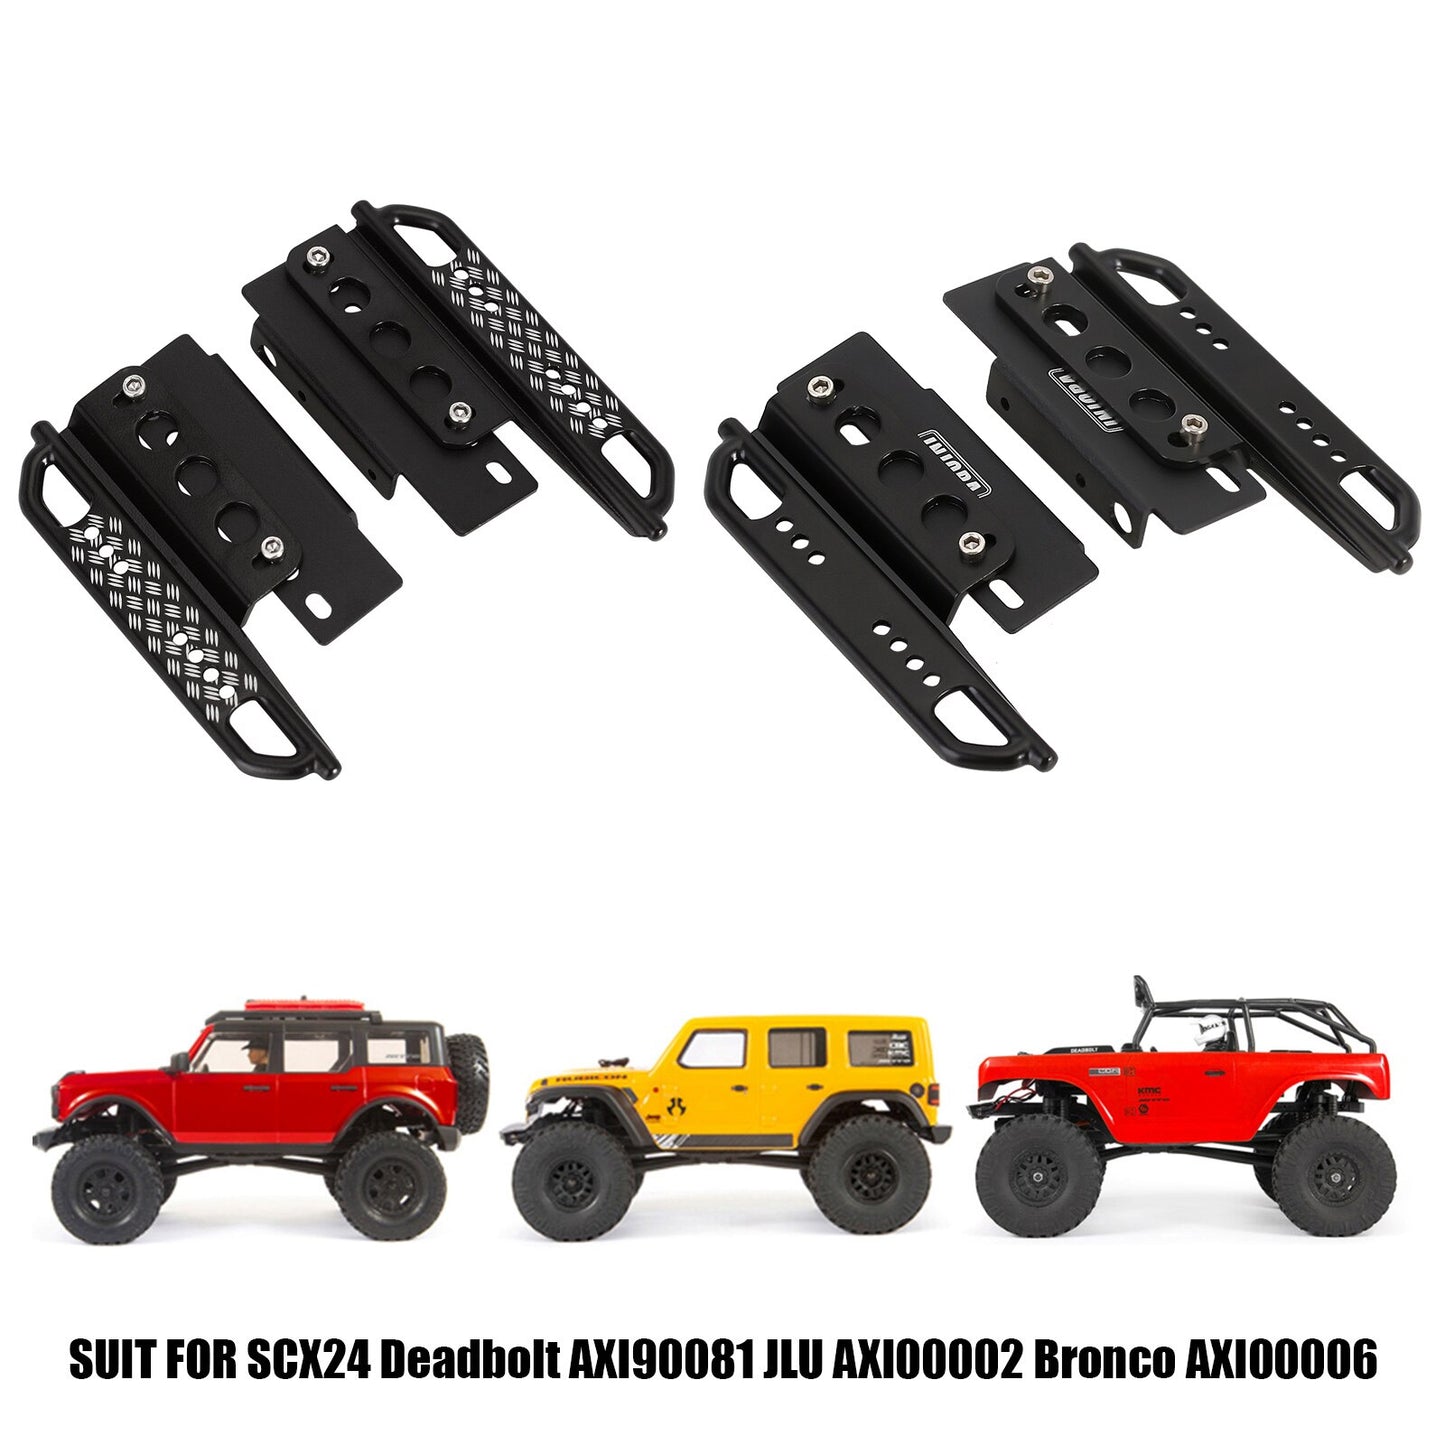 INJORA Metal Rock Sliders Side Pedal for RC Crawler Car Axial SCX24 Jeep Wrangler JLU Deadbolt Ford Bronco Upgrade Parts